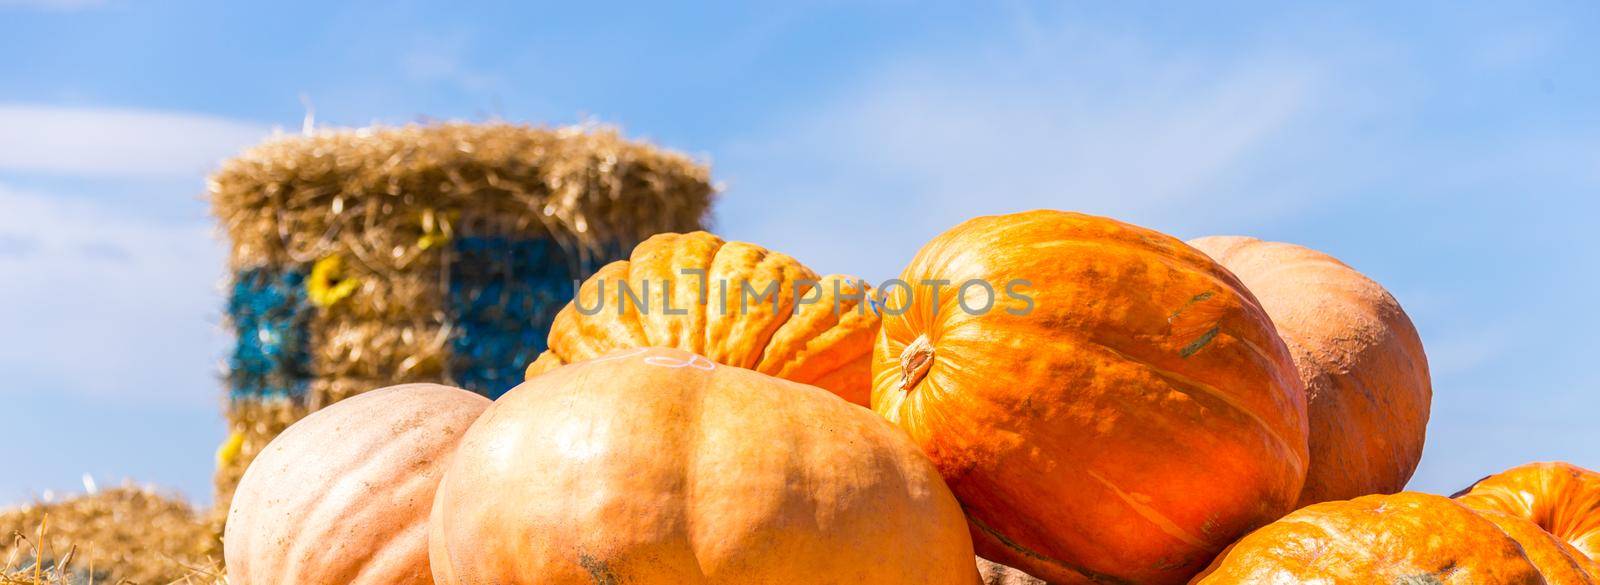 orange pumpkins at outdoor farmer market on straw by Mariakray